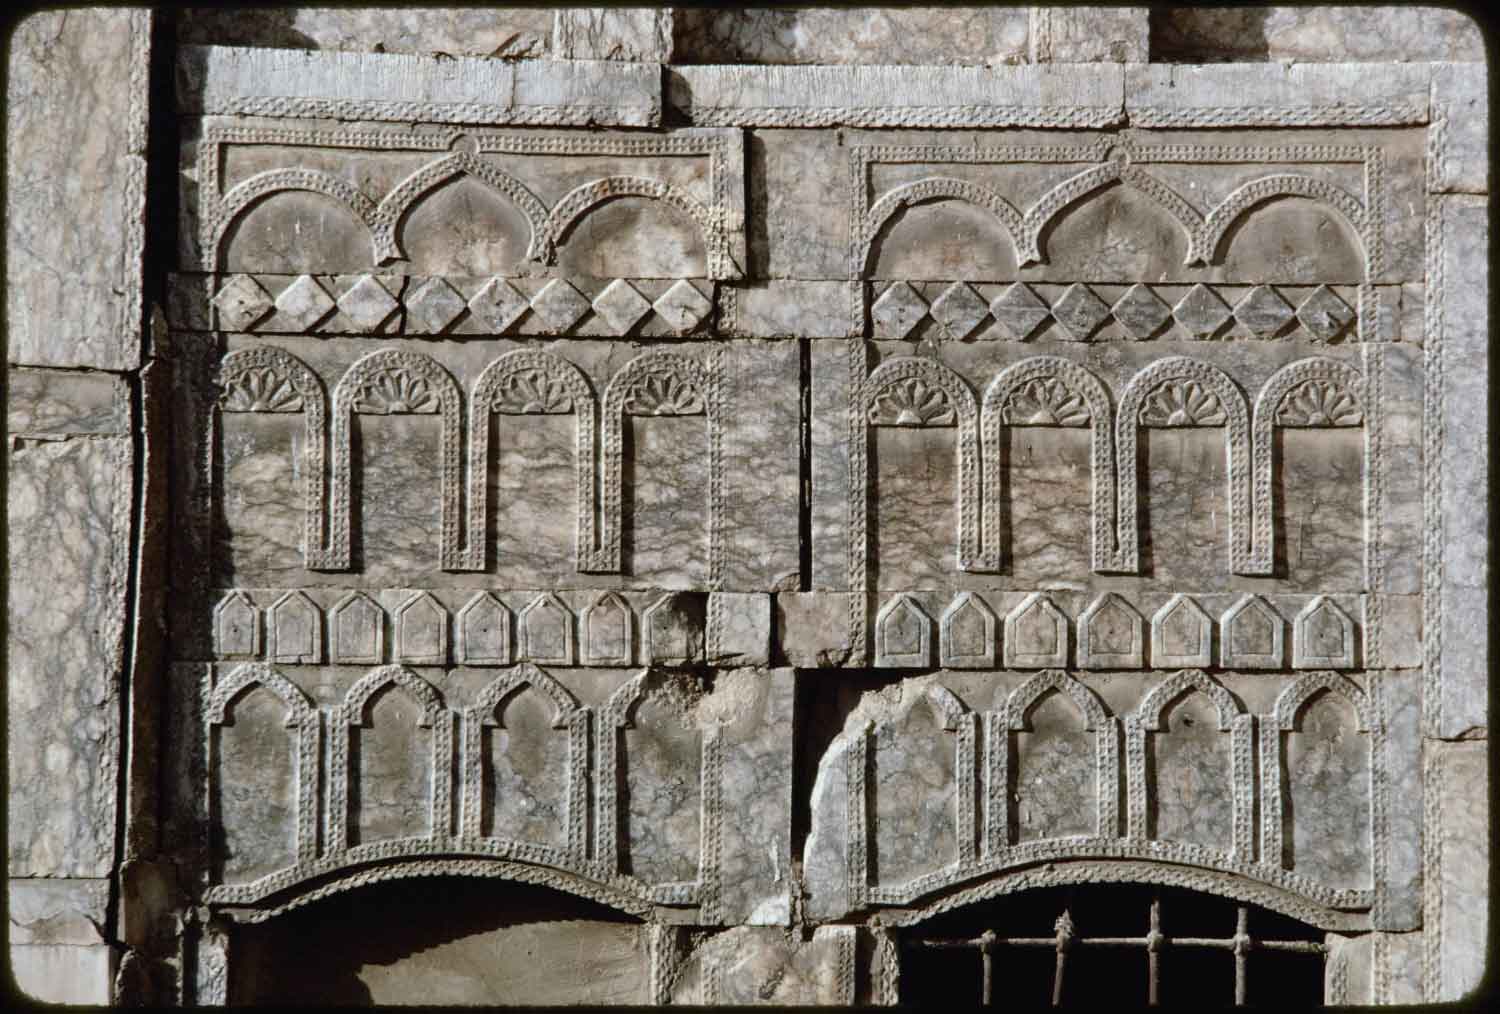 Bayt al-Tutunji - Courtyard, detail view of stonework on east facade.